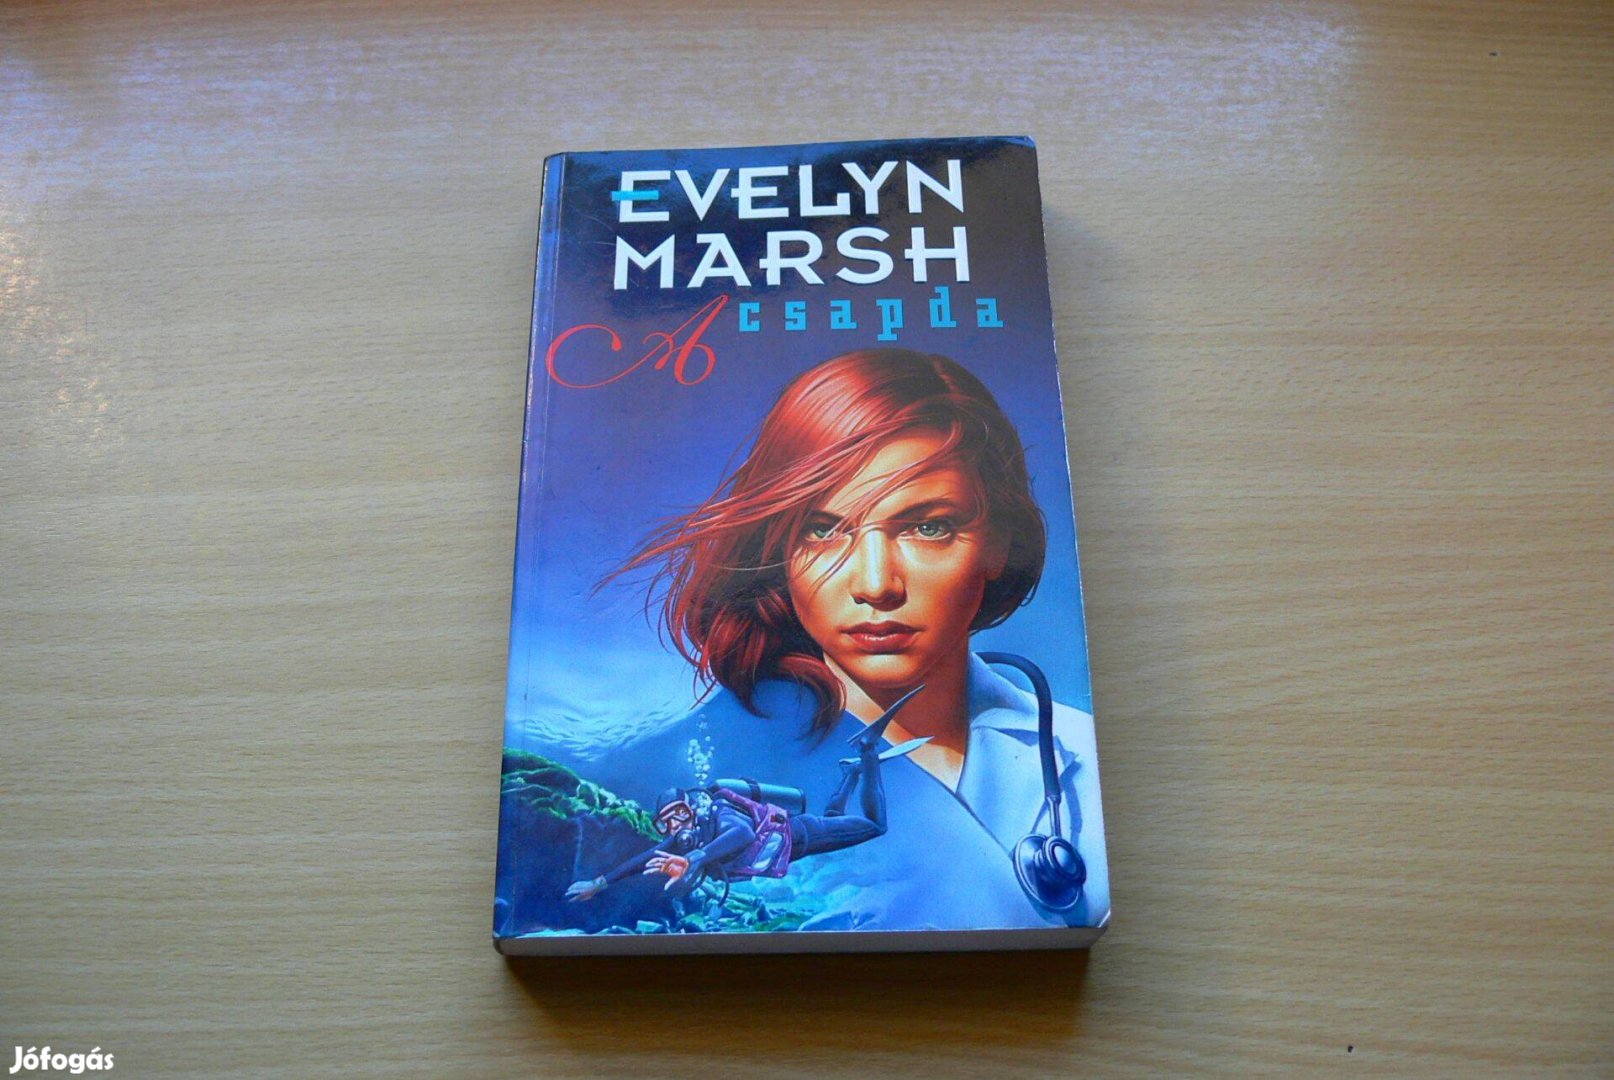 Evelyn Marsh könyvcsomag (10 db)